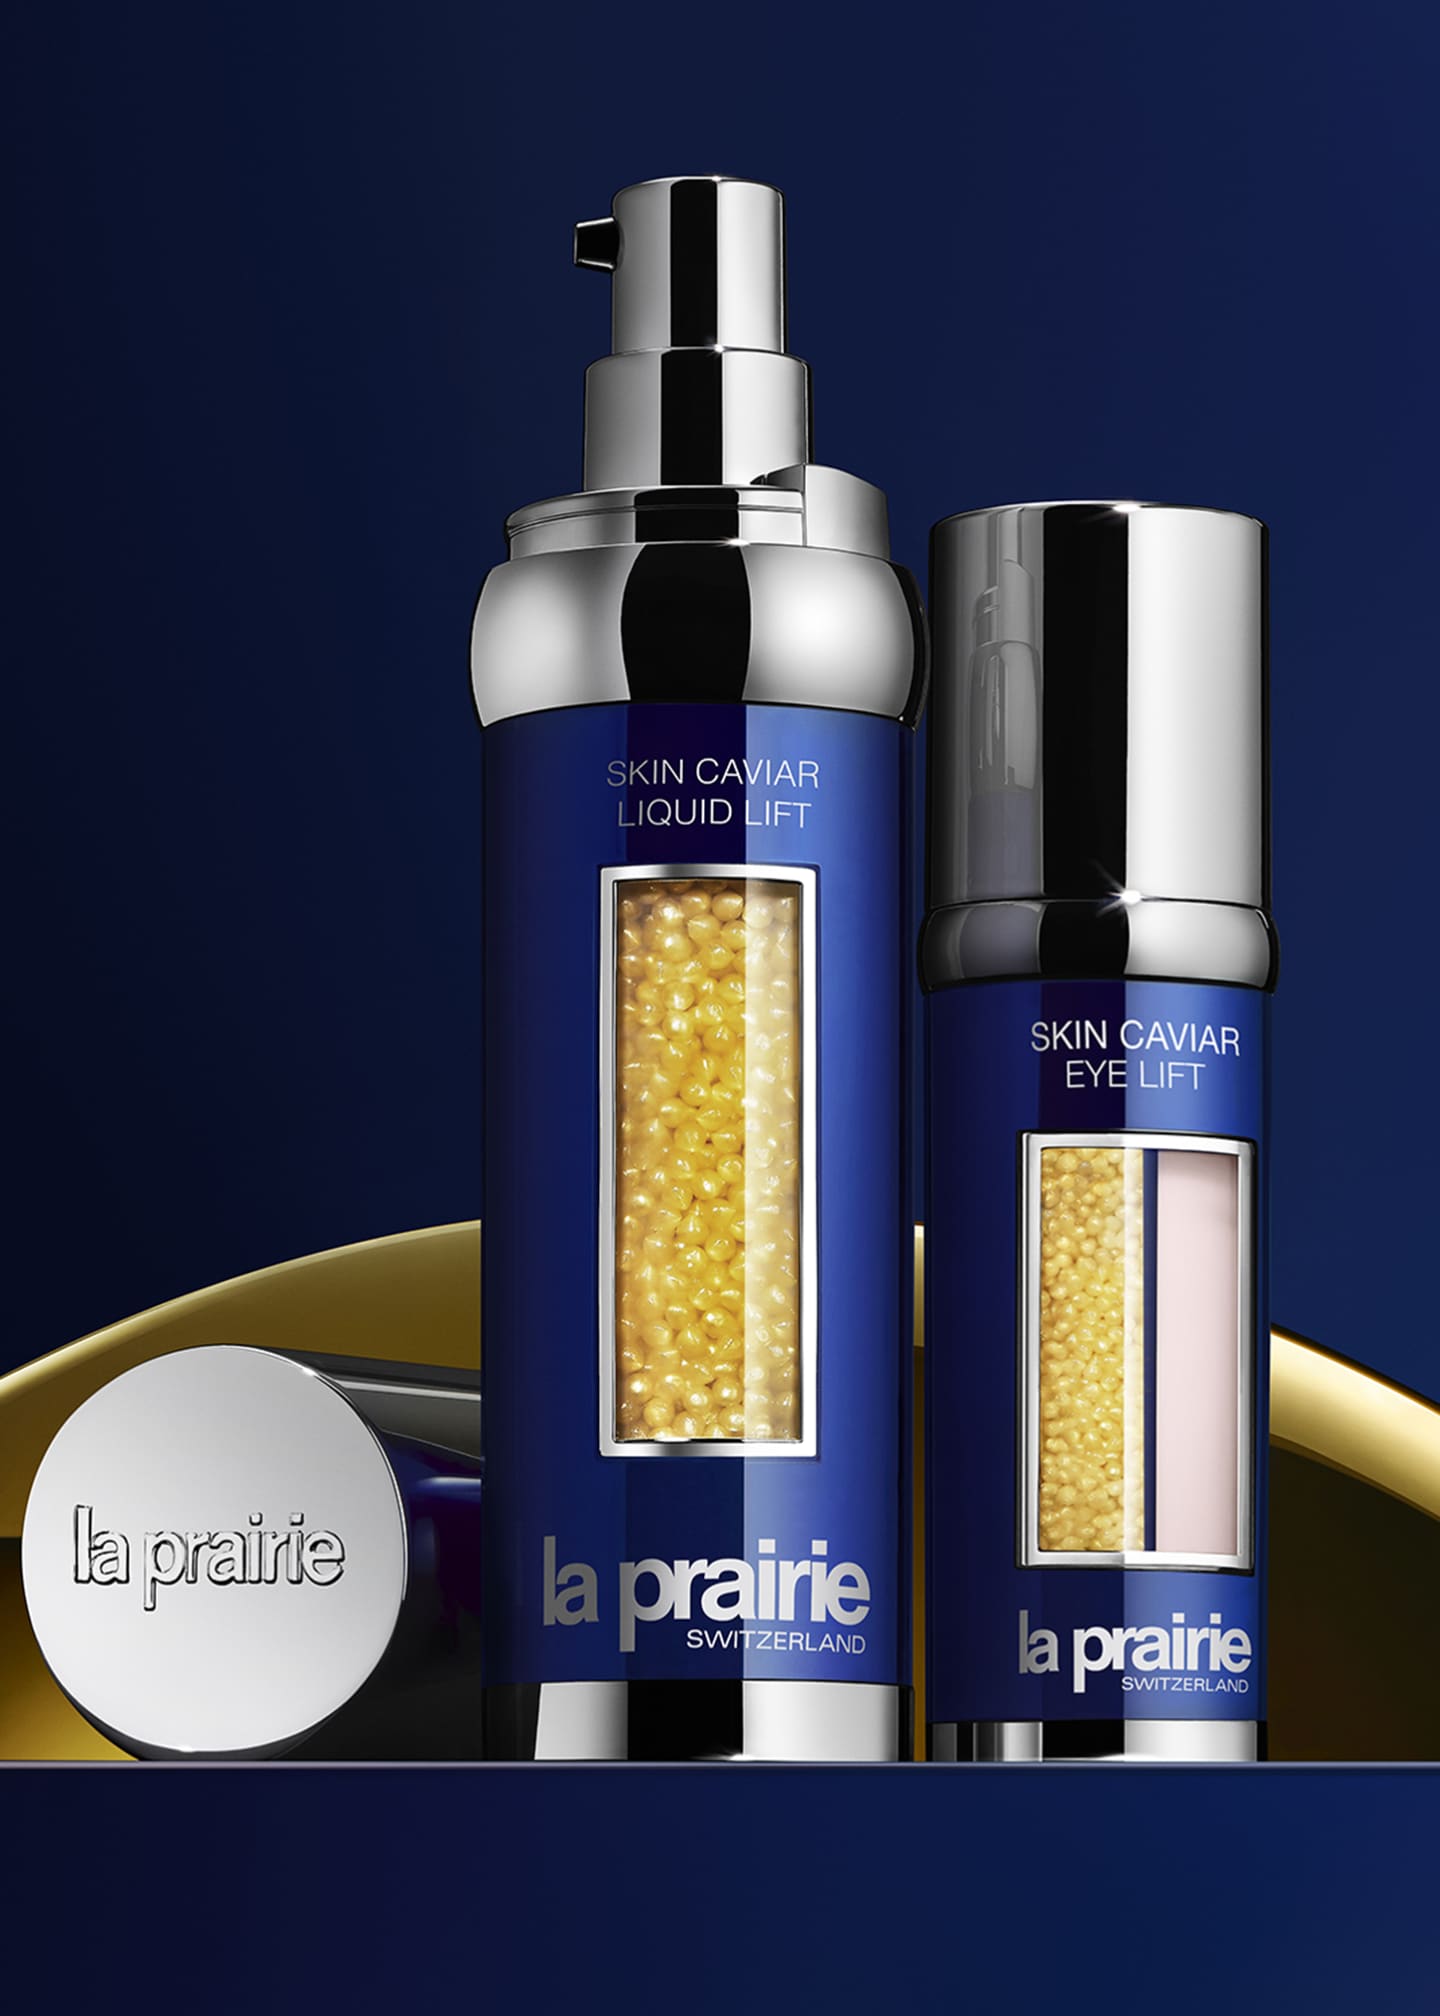 La Prairie 1.7 oz. Skin Caviar Liquid Lift Face Serum Image 4 of 5